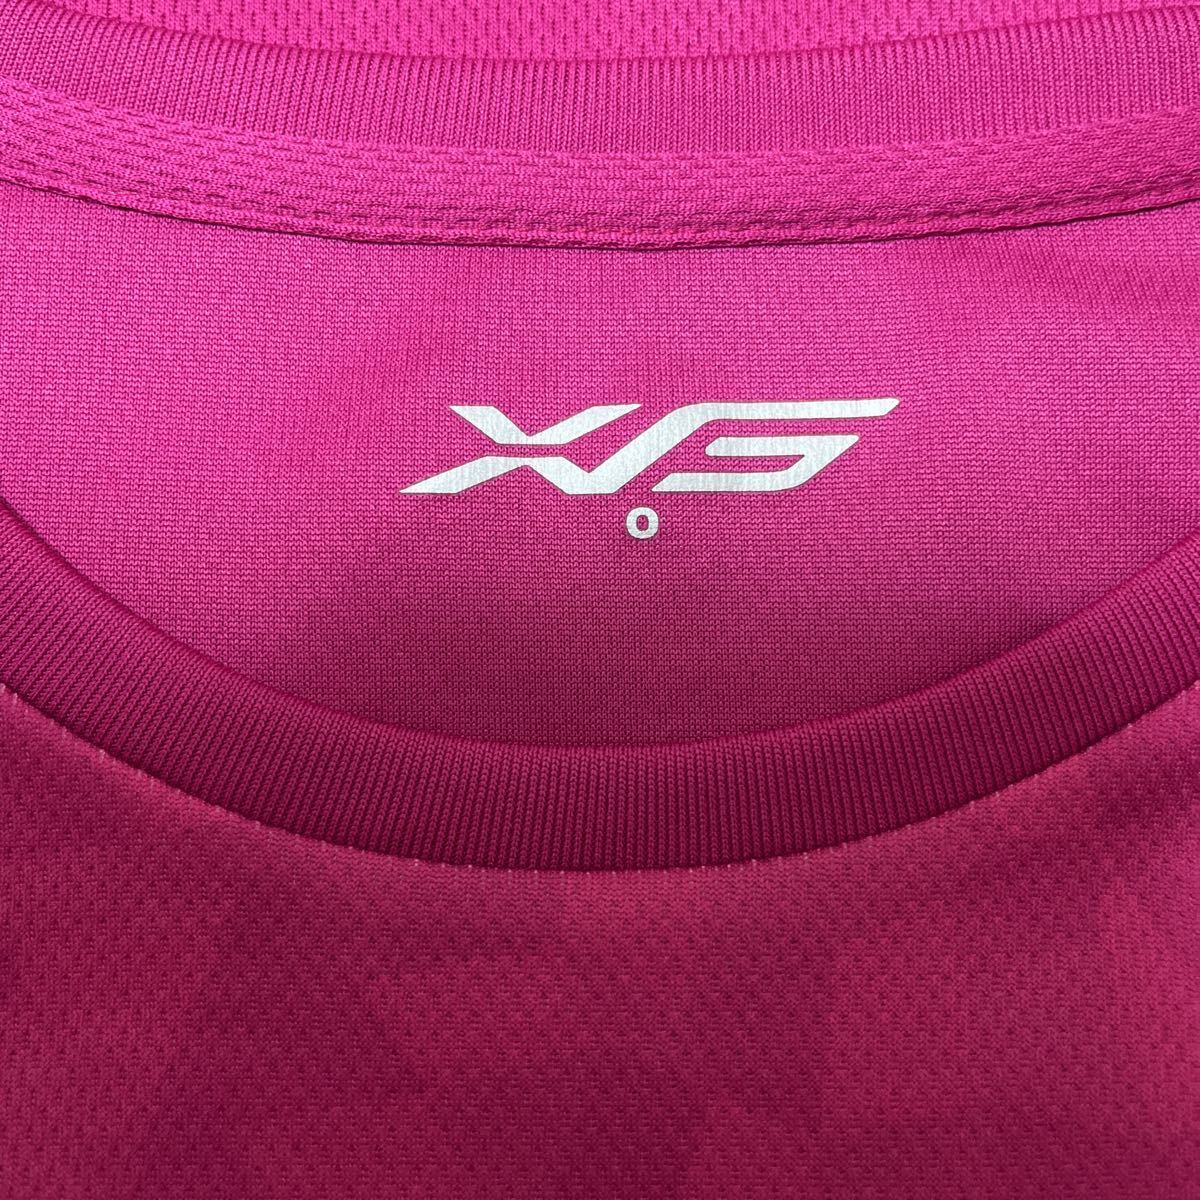 XTS женский короткий рукав футболка тренировка одежда O размер полиэстер 